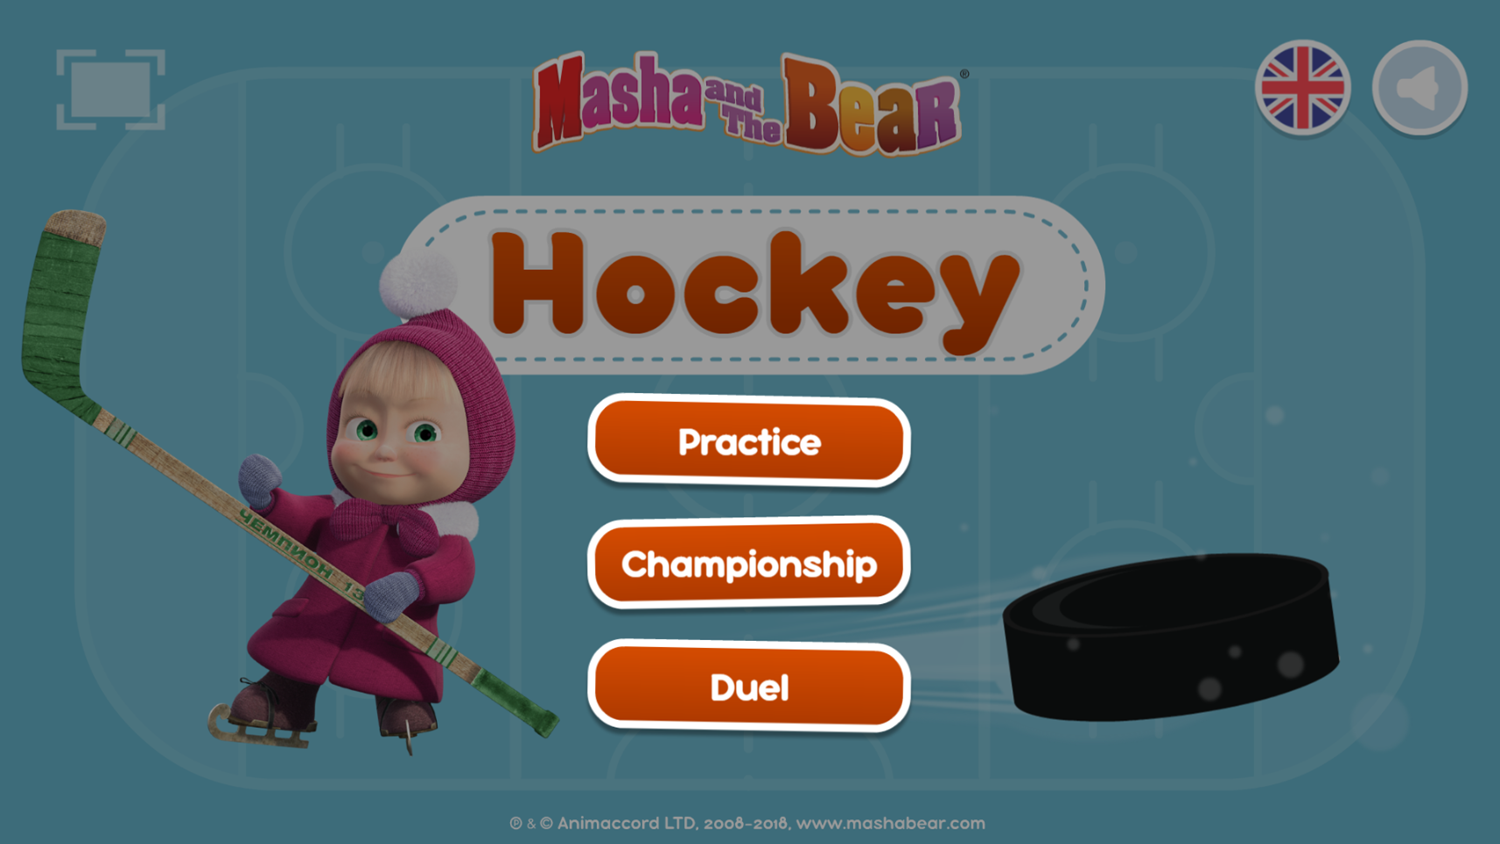 Masha and the Bear Hockey Game Select Mode Screenshot.